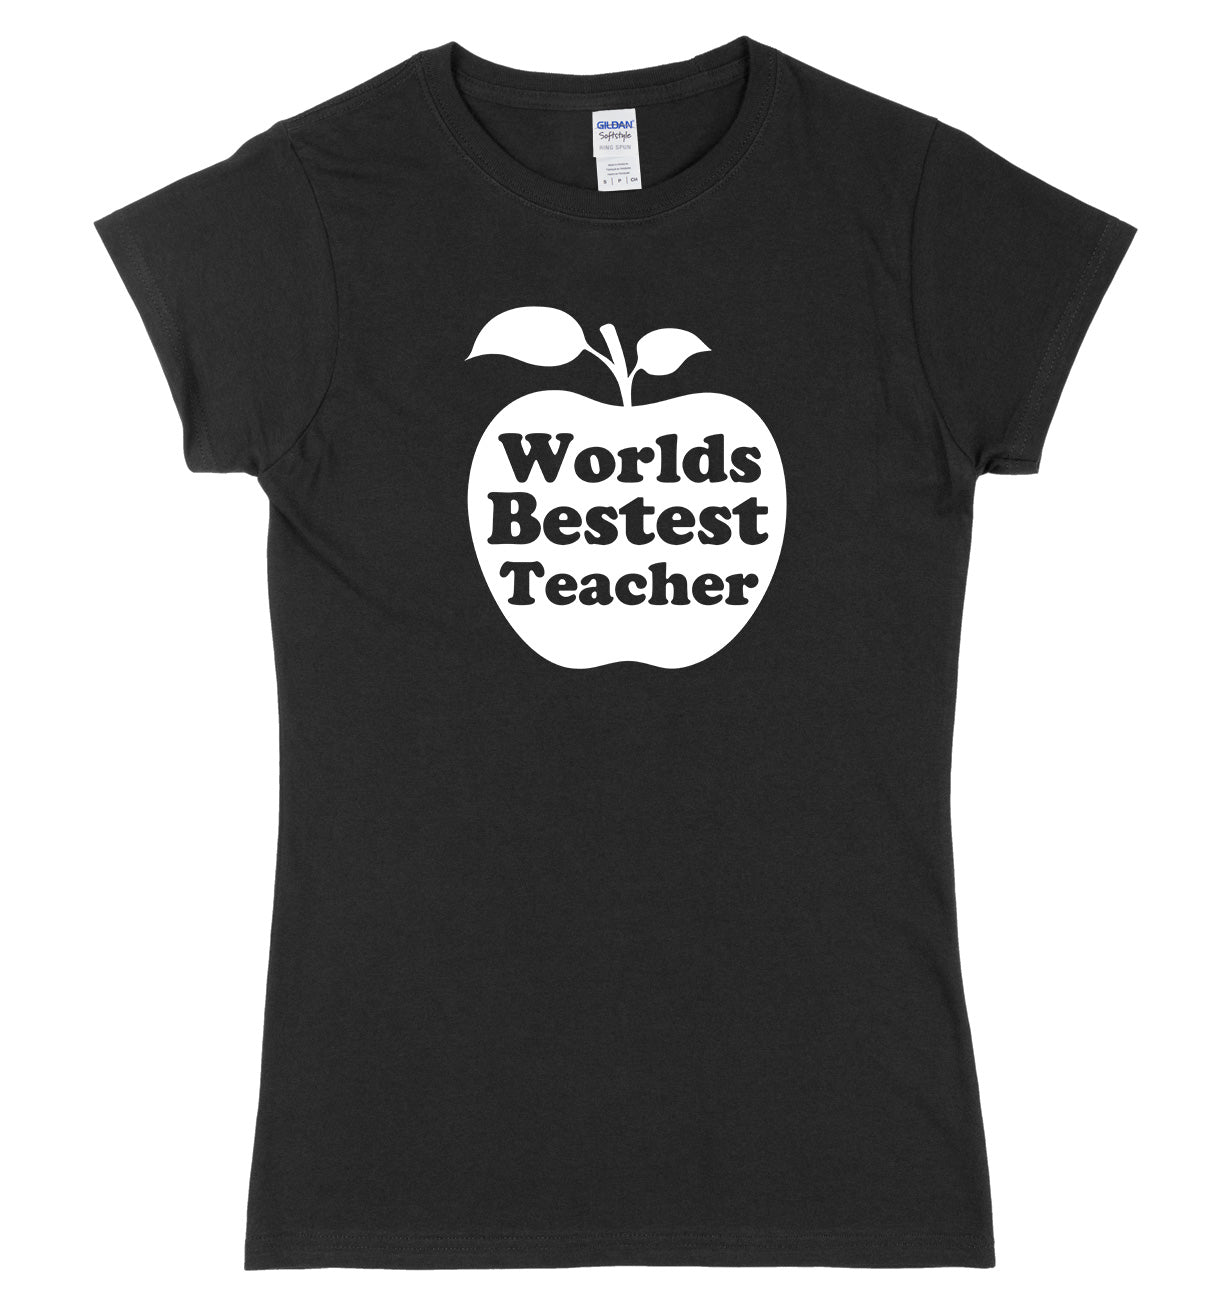 World's Bestest Teacher Womens Ladies Slim Fit T-Shirt